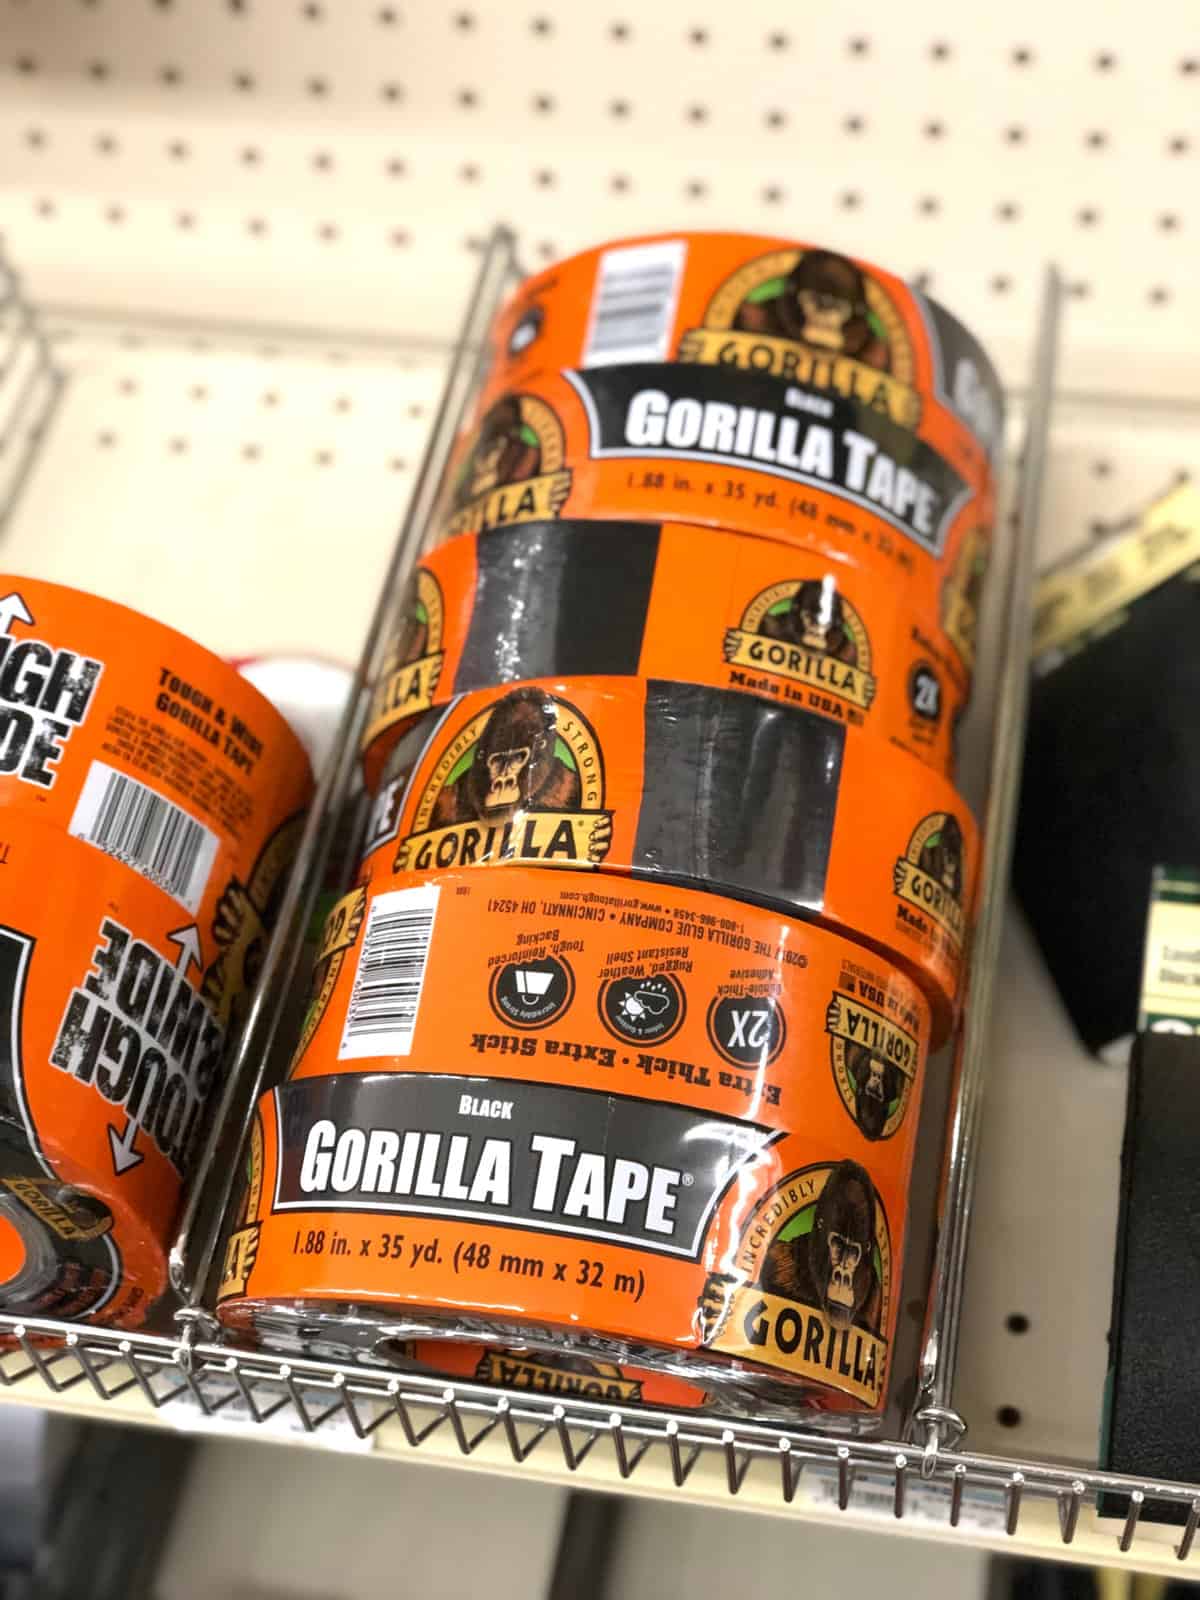 Black Gorilla brand tape in rolls on a shelf in a local supply store.